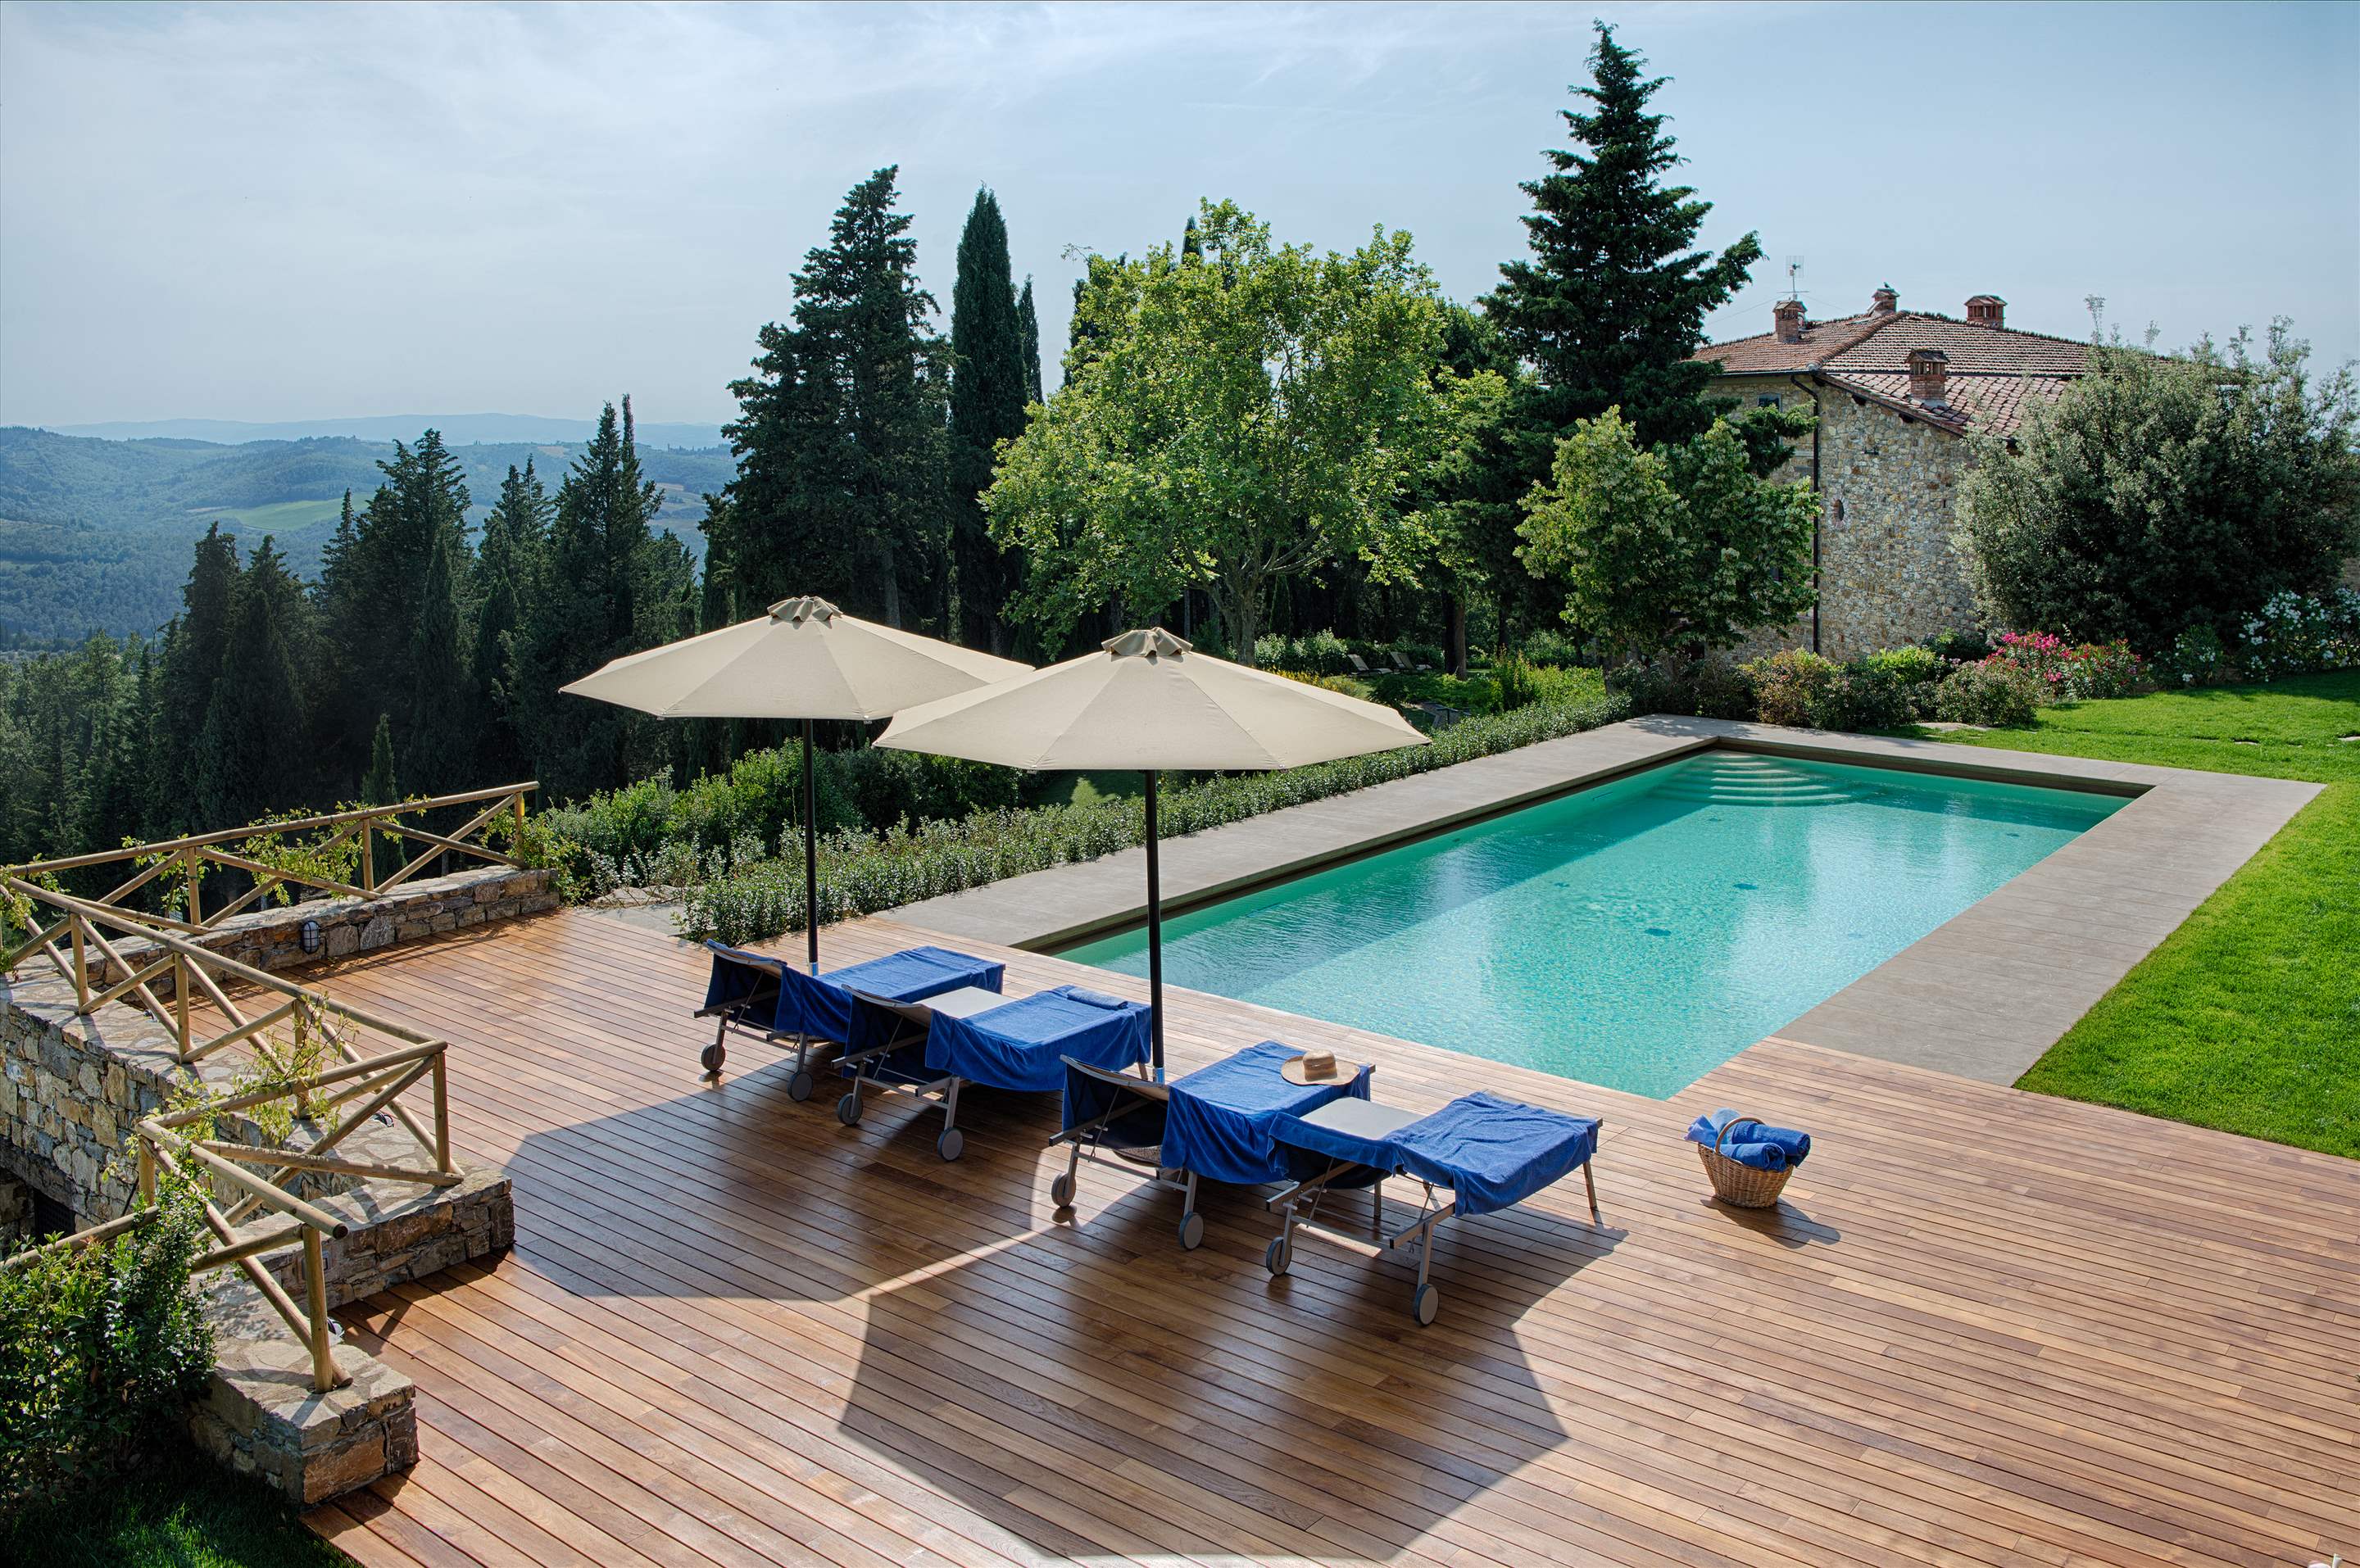 Villa La Valetta, Hotel Bedroom 2 persons, 1 bedroom villa in Chianti & Countryside, Tuscany